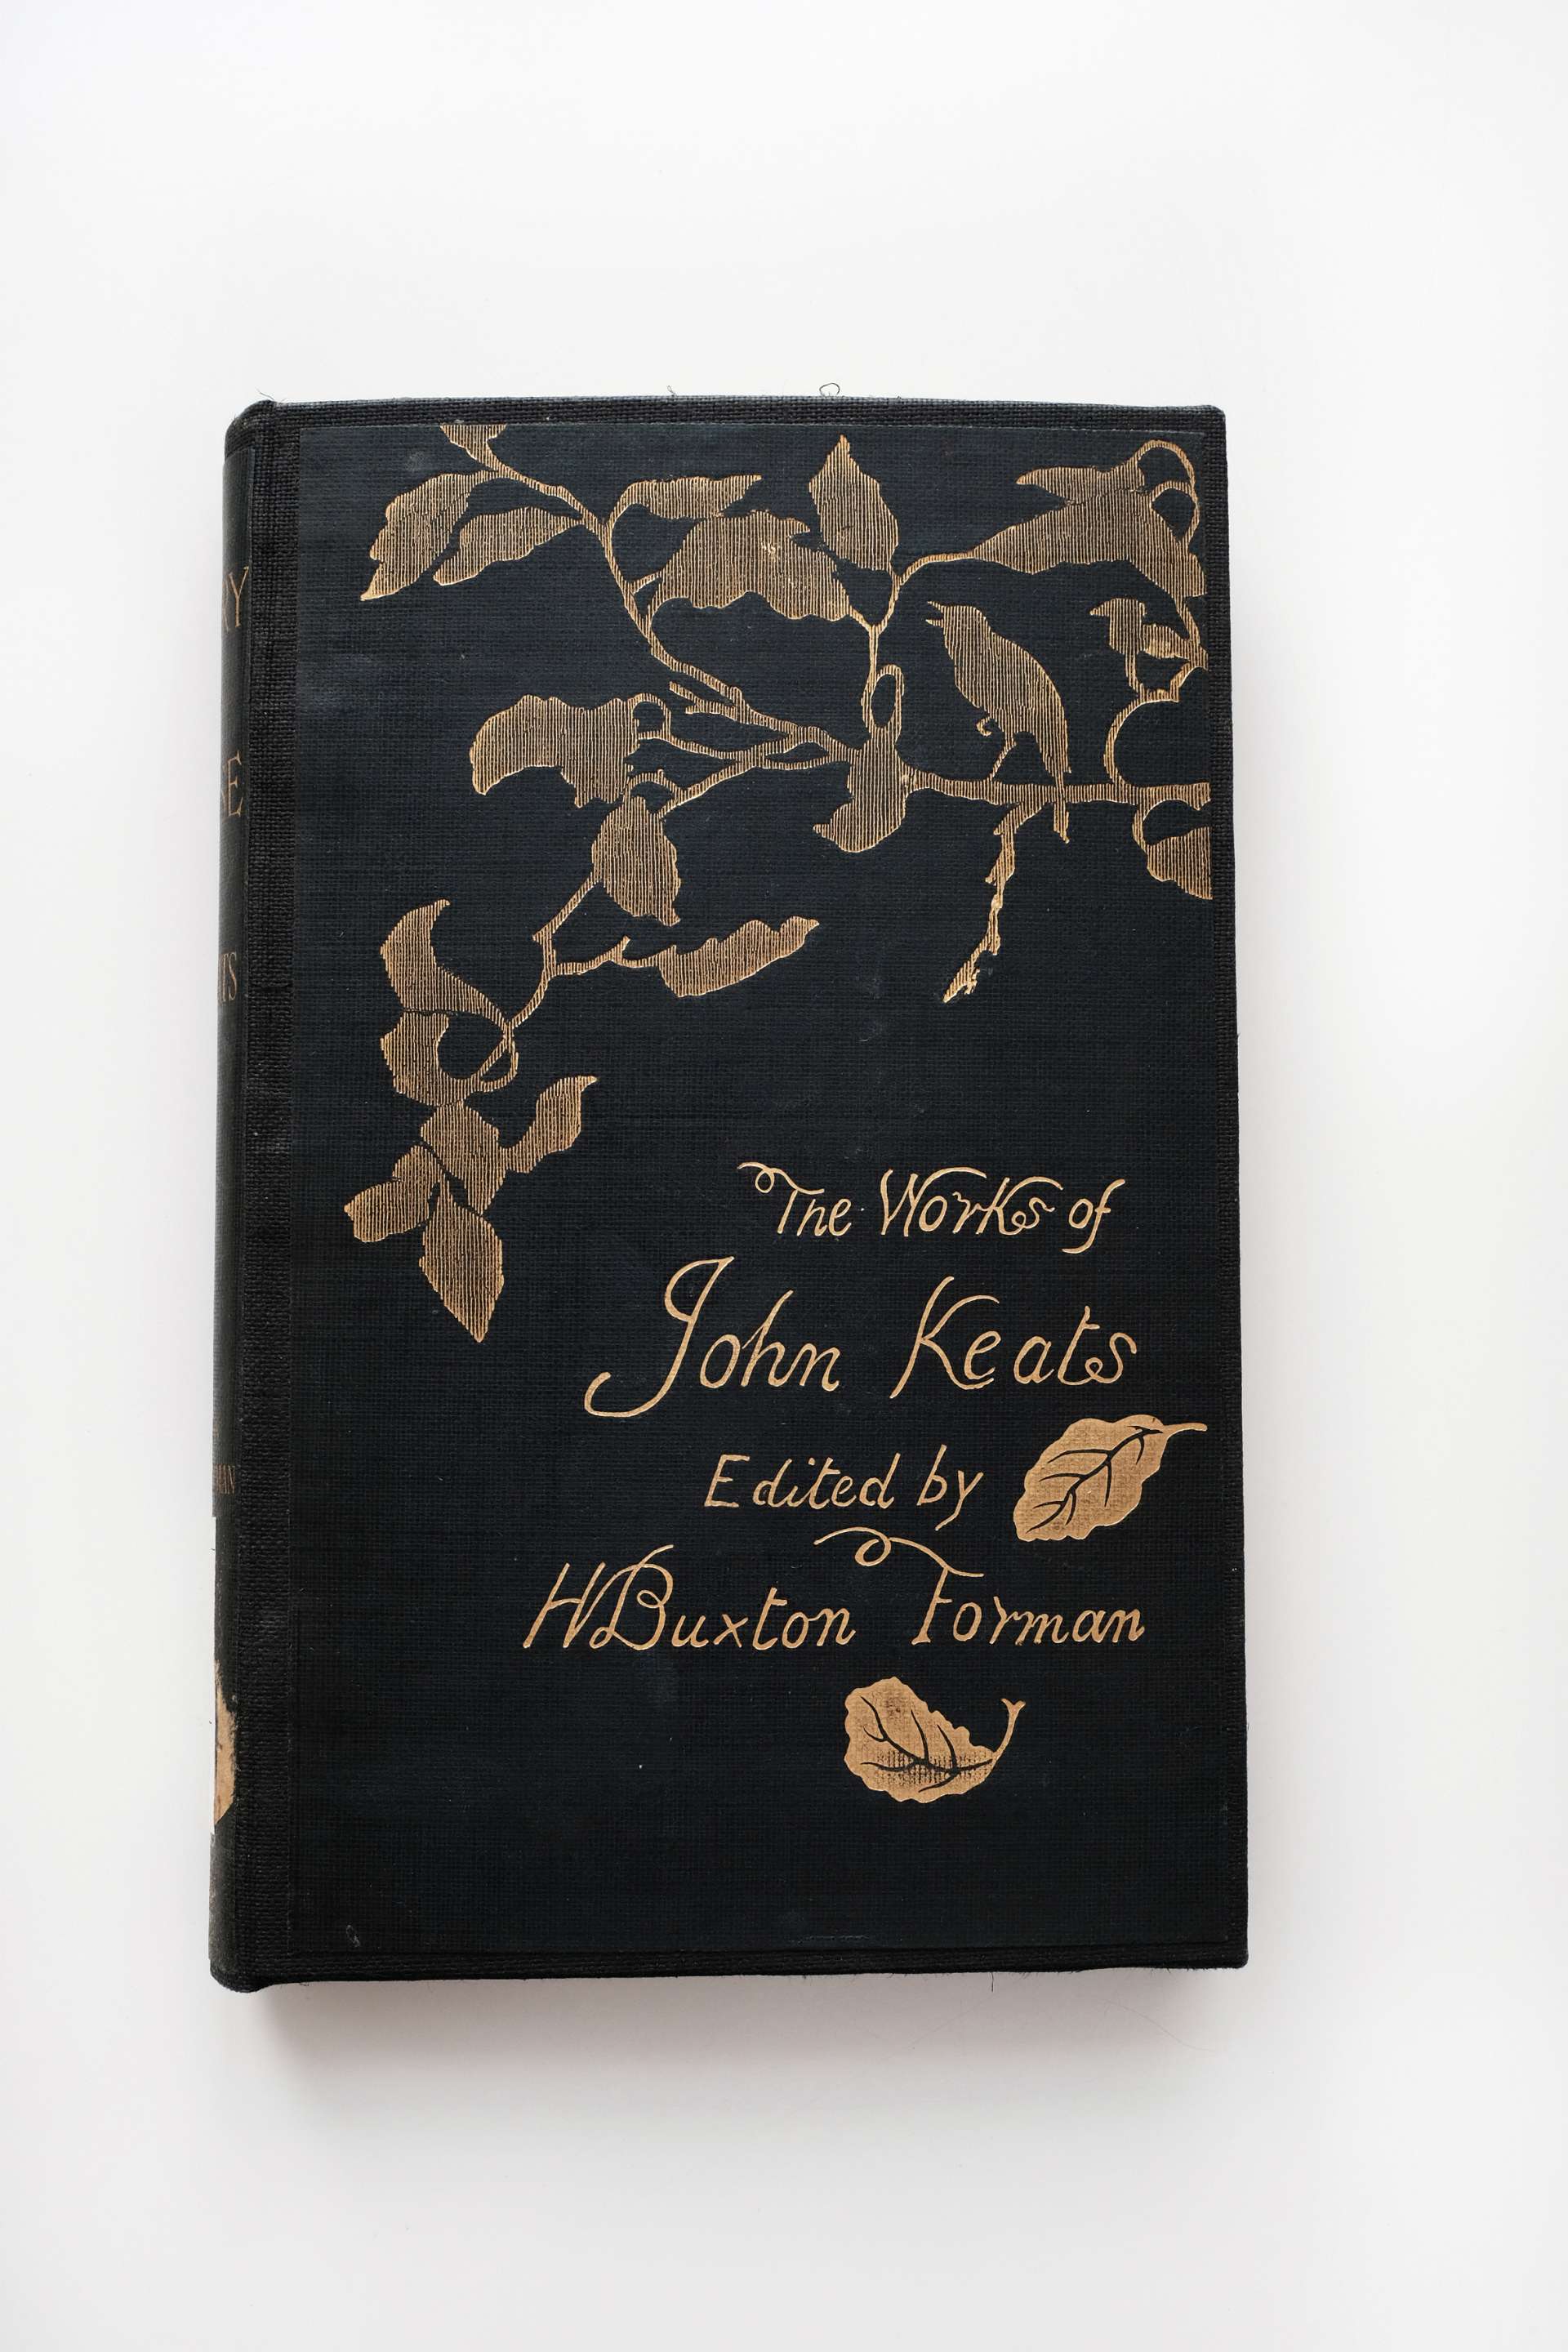 The works of John Keats, 1889